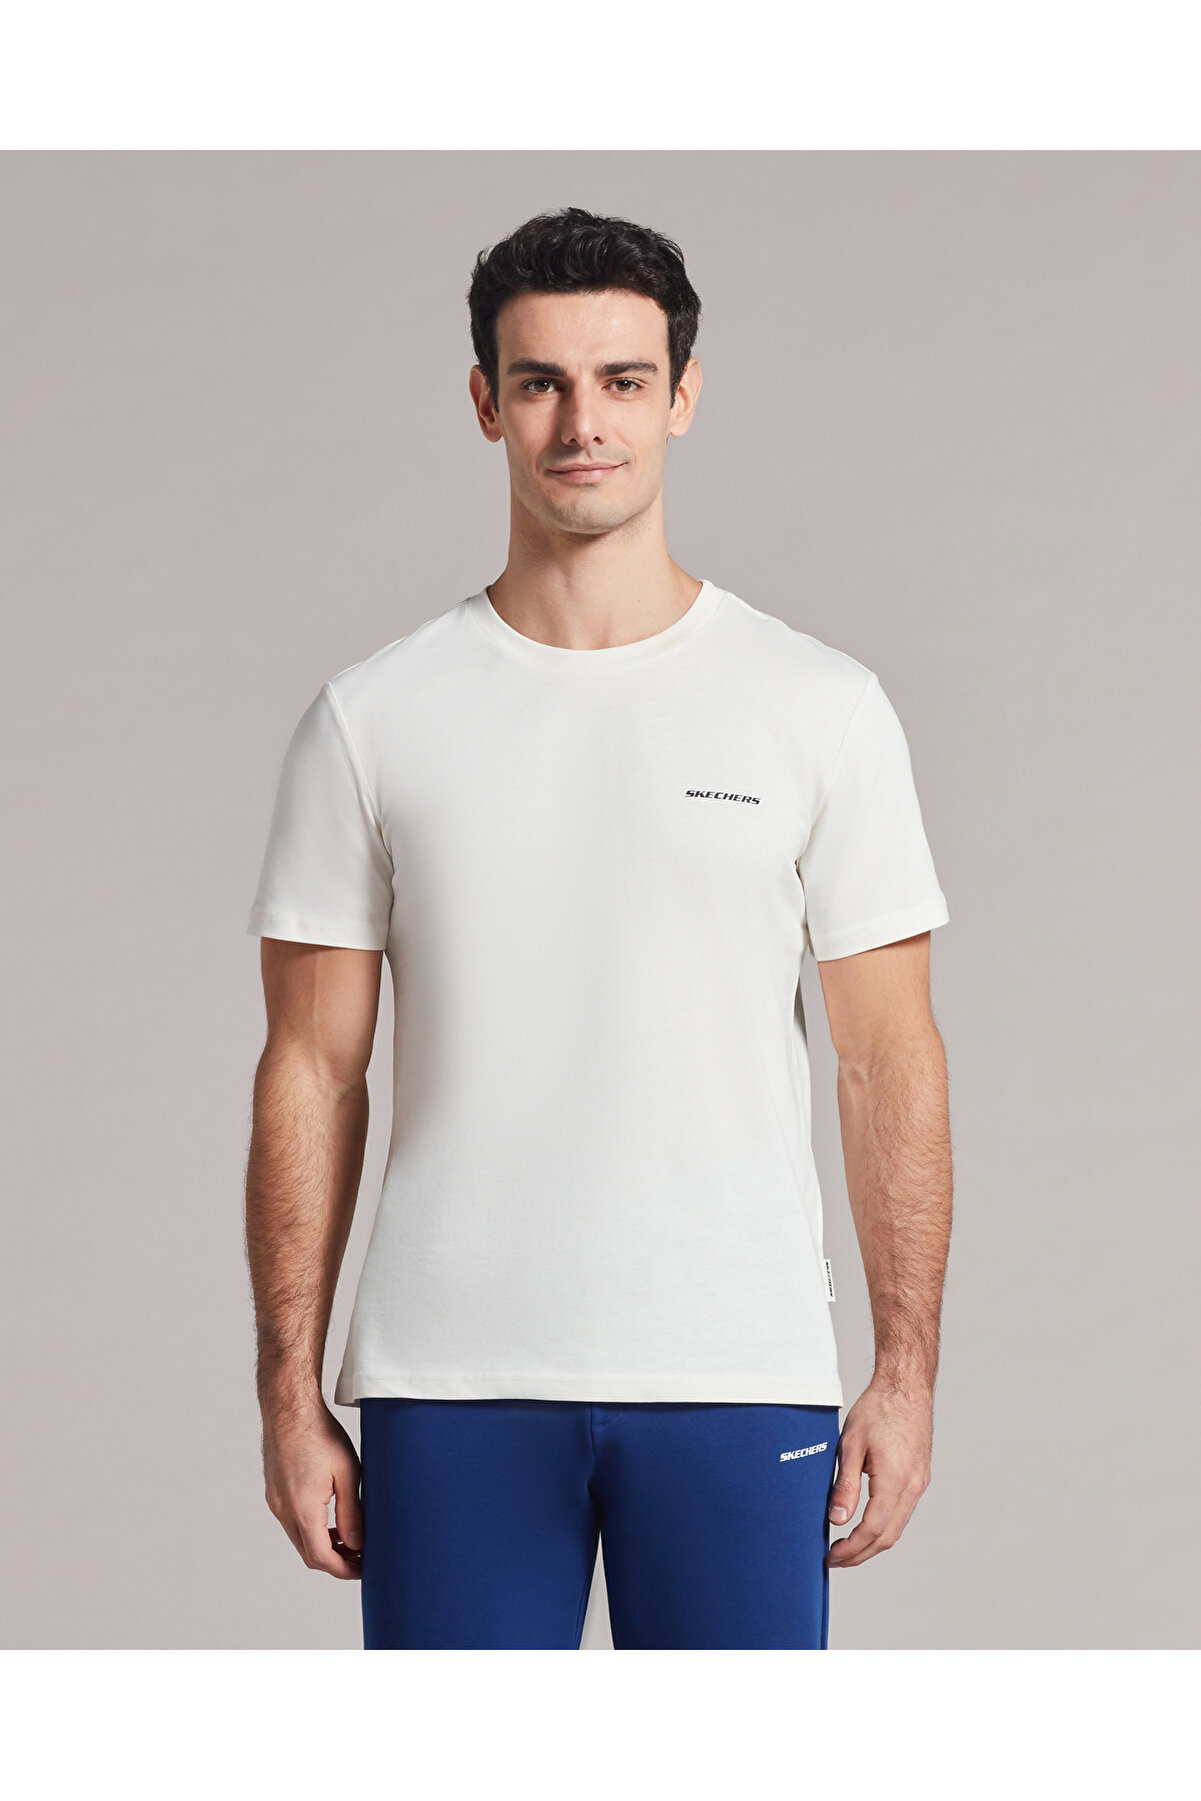 Skechers M New Basics Crew Neck T-shirt Erkek Beyaz Tshirt S212910-102